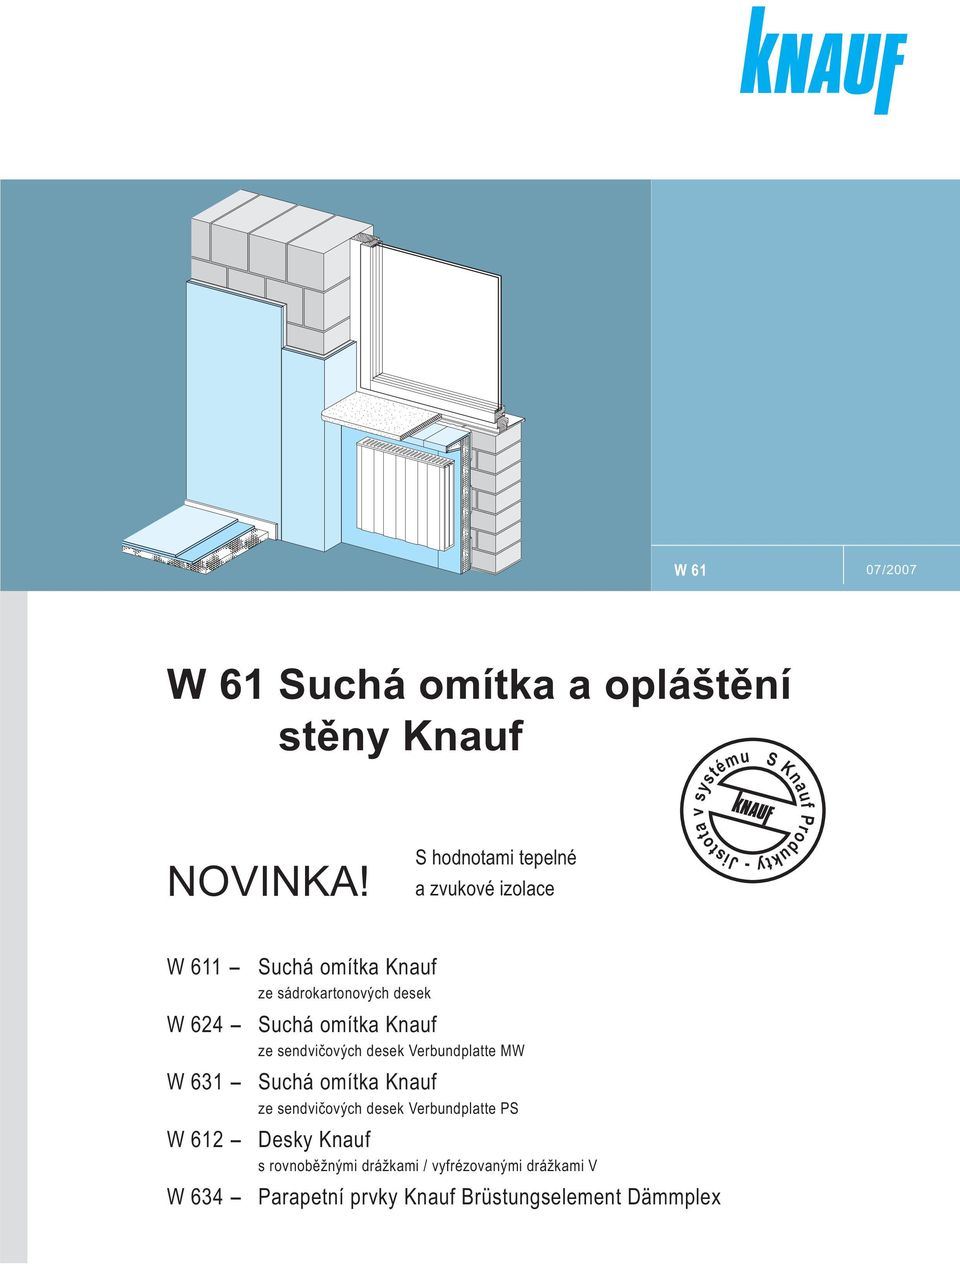 sádrokartonových desek W 4 - Suchá omítka Knauf ze sendvičových desek Verbundplatte MW W 1 - Suchá omítka